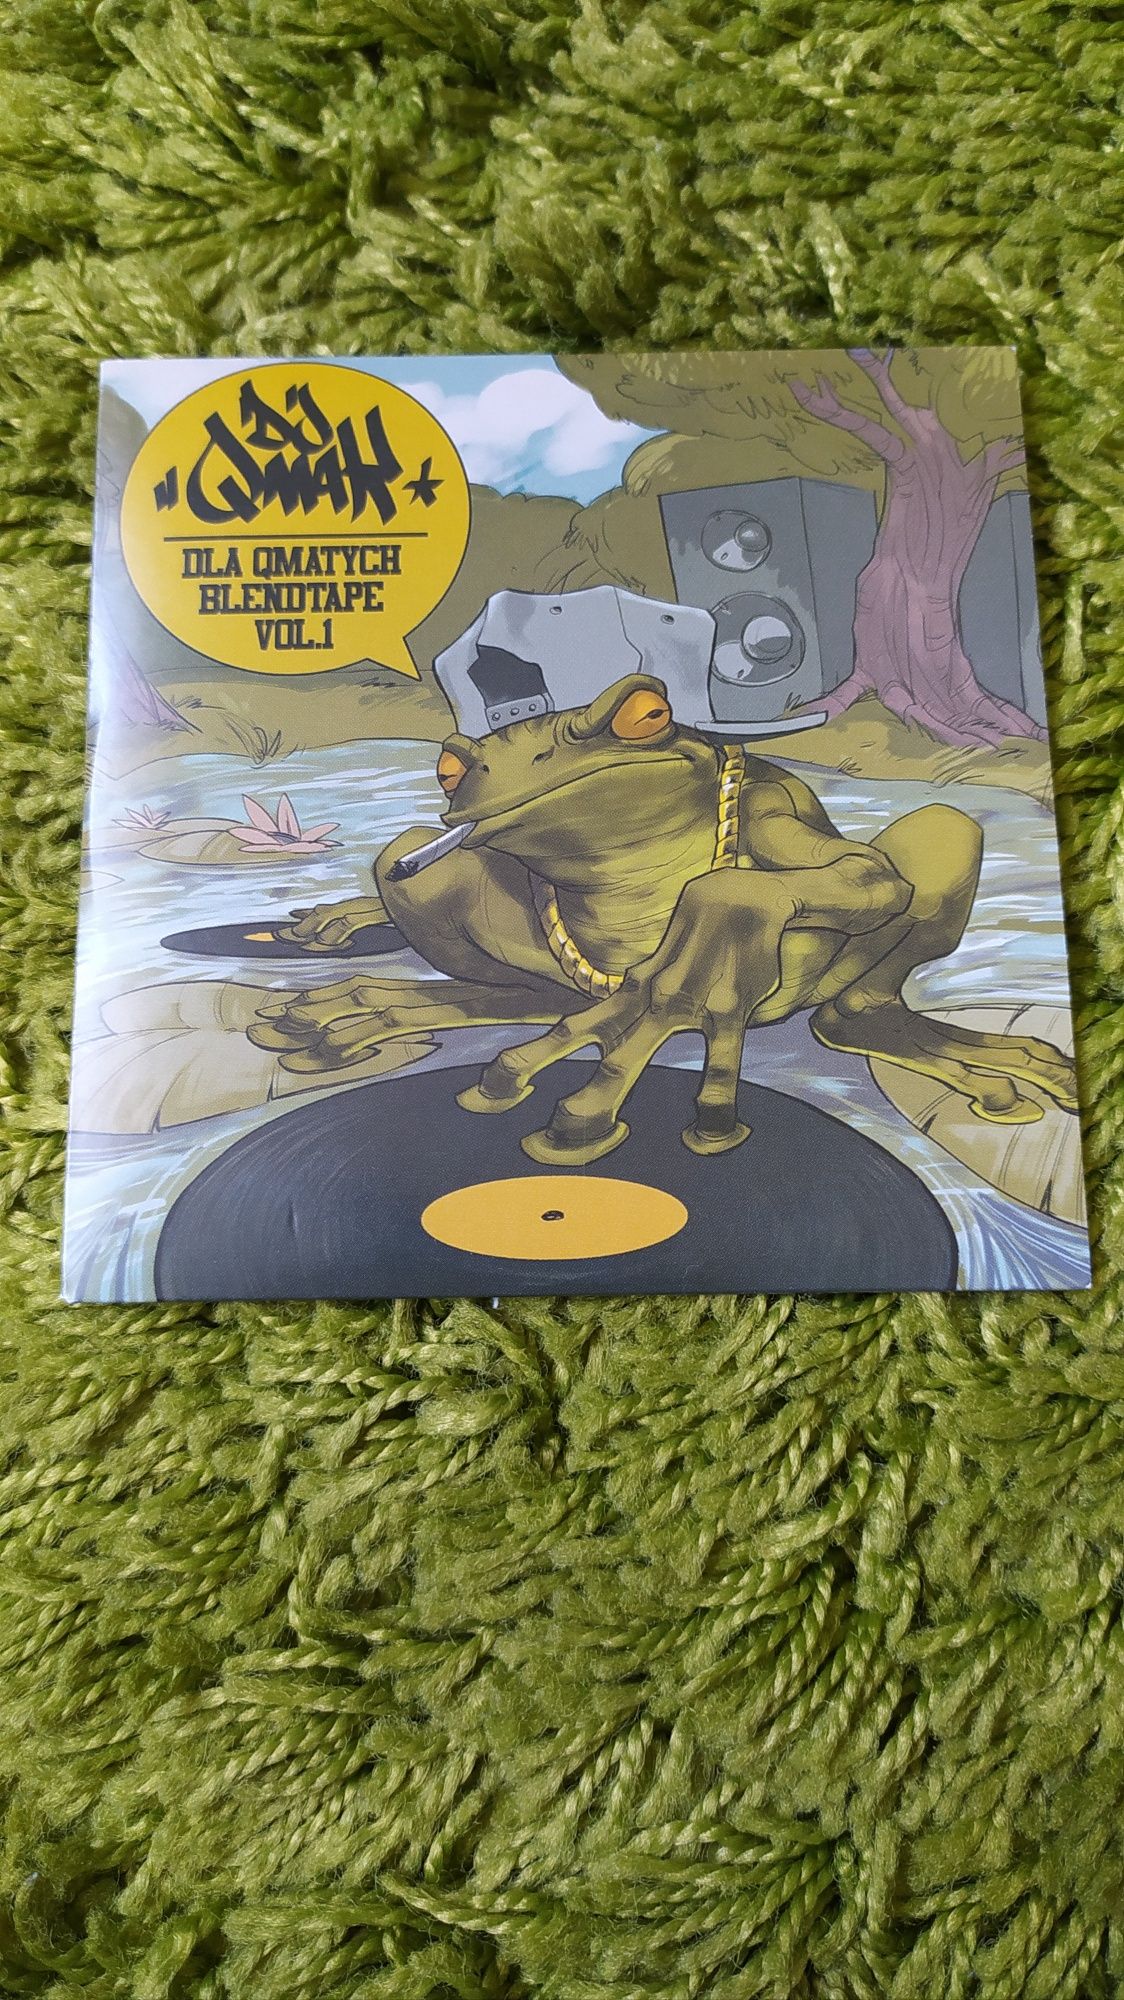 Płyta CD- DJ Qmak- Dla qmatych blendtape vol. 1